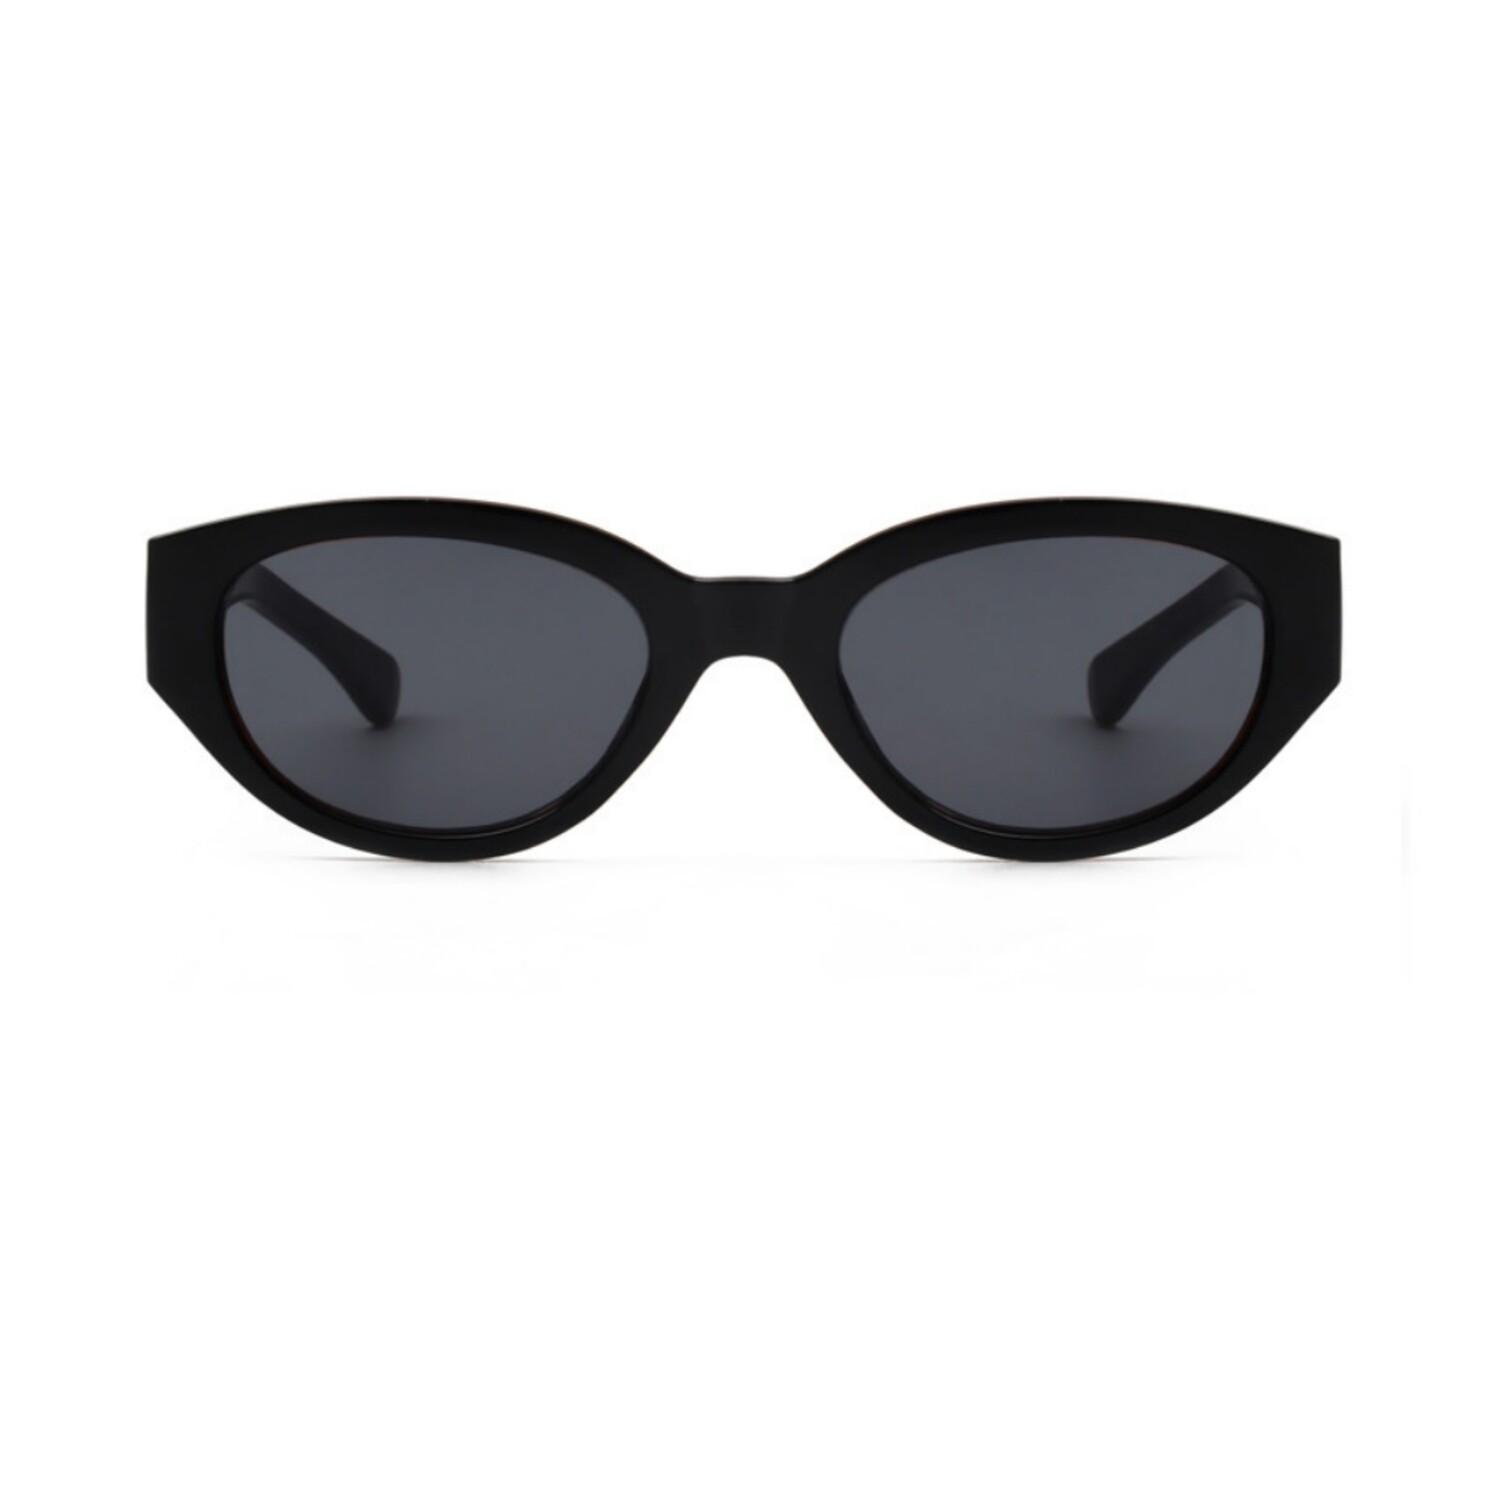 Слънчеви очила "Winnie Black"
A.Kjærbede